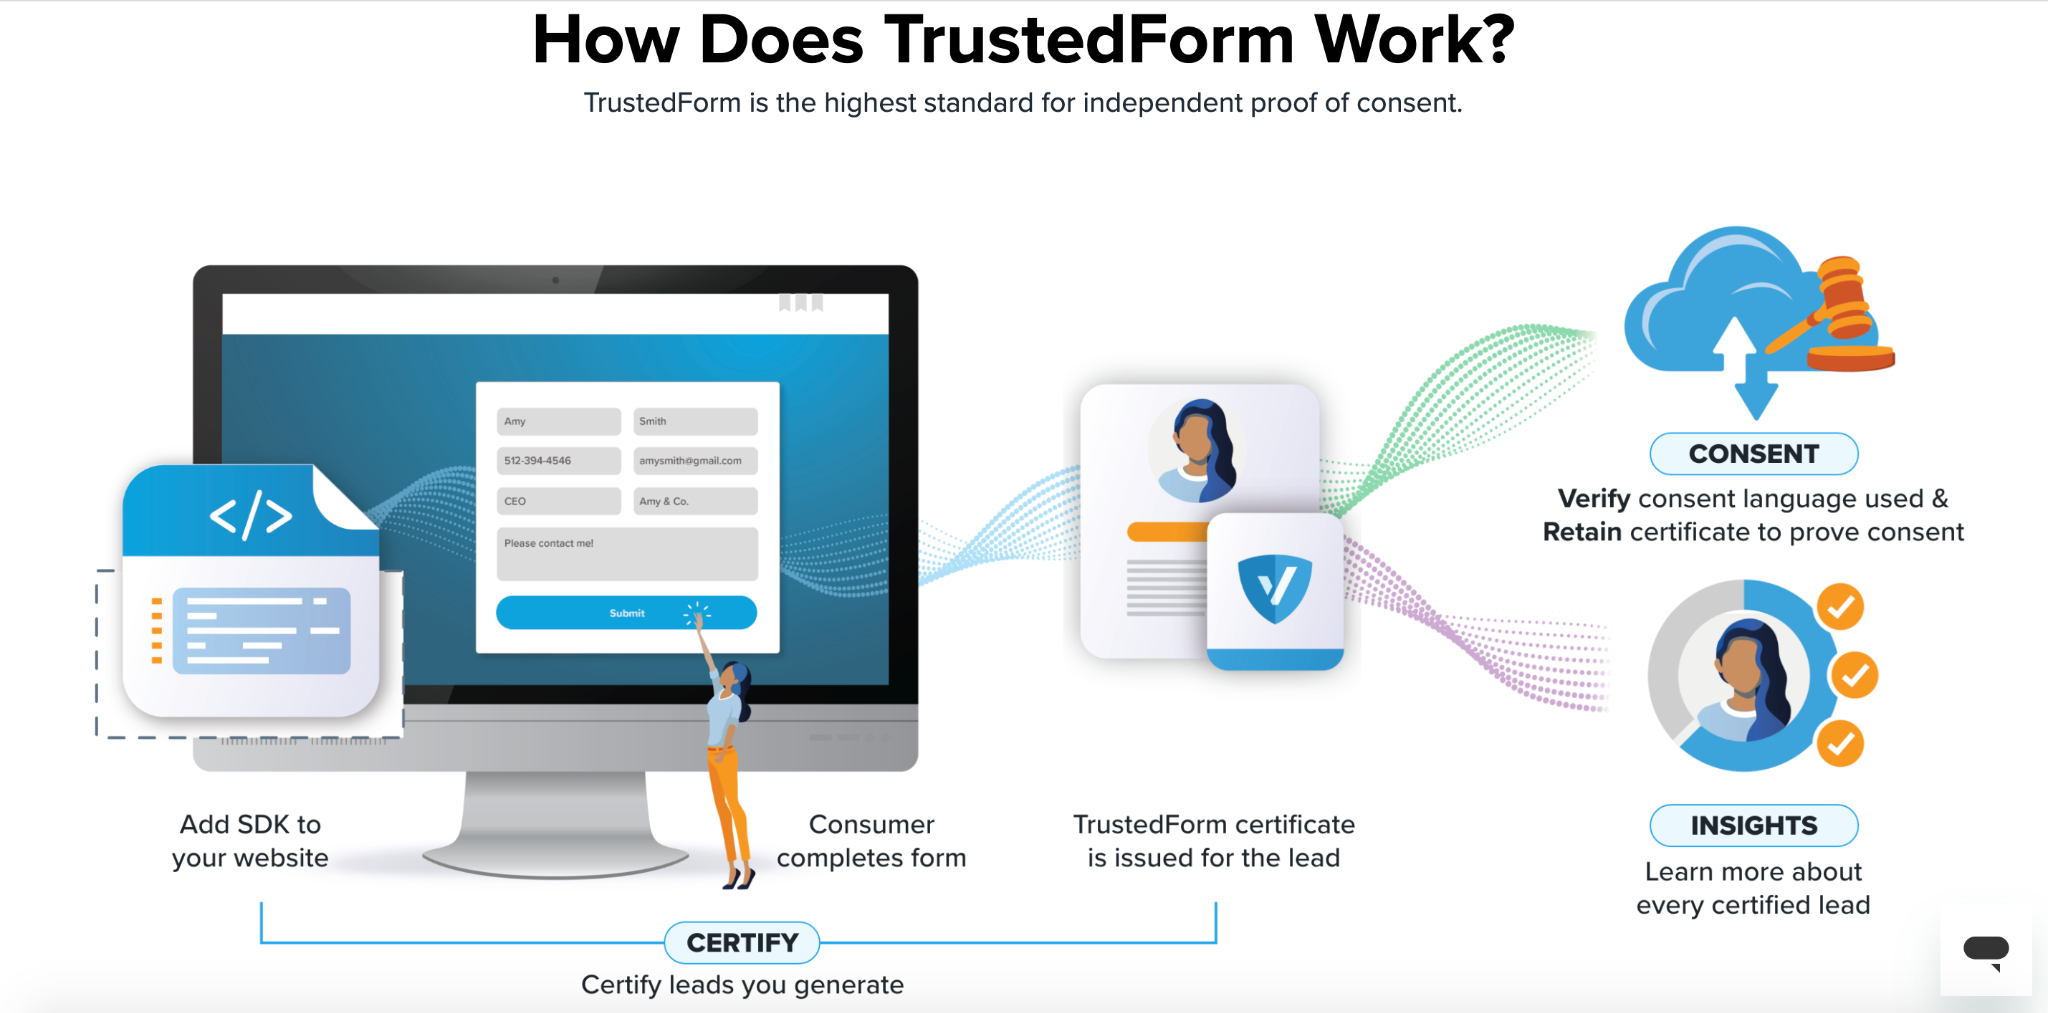 ActiveProspect TrustedForm